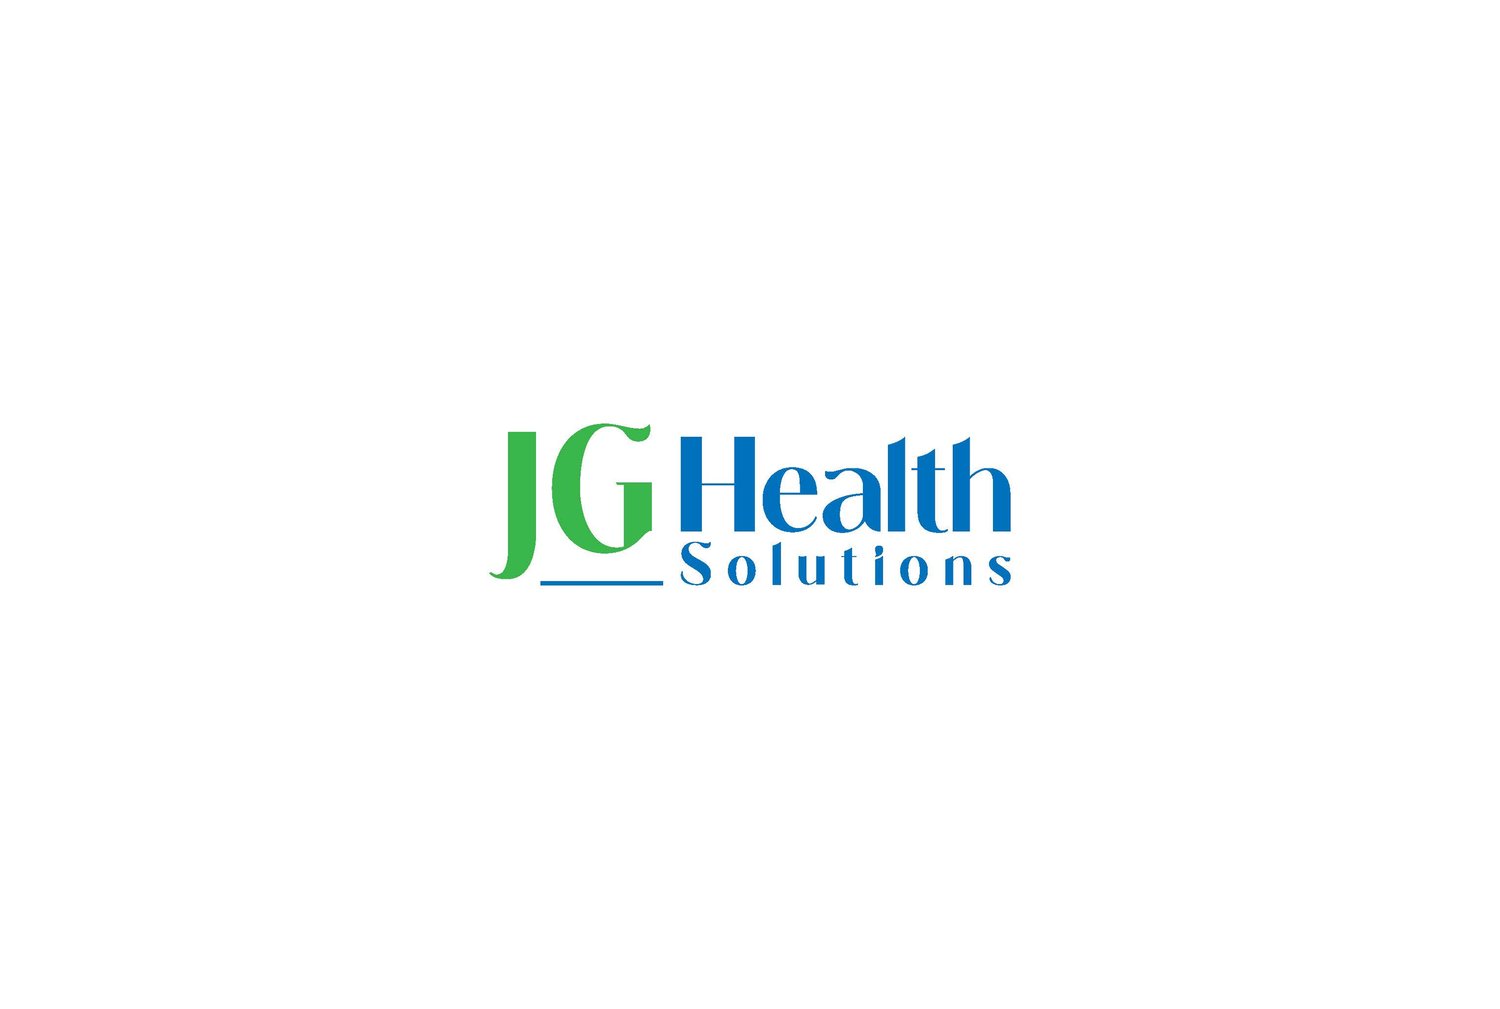 JG Health Solutions